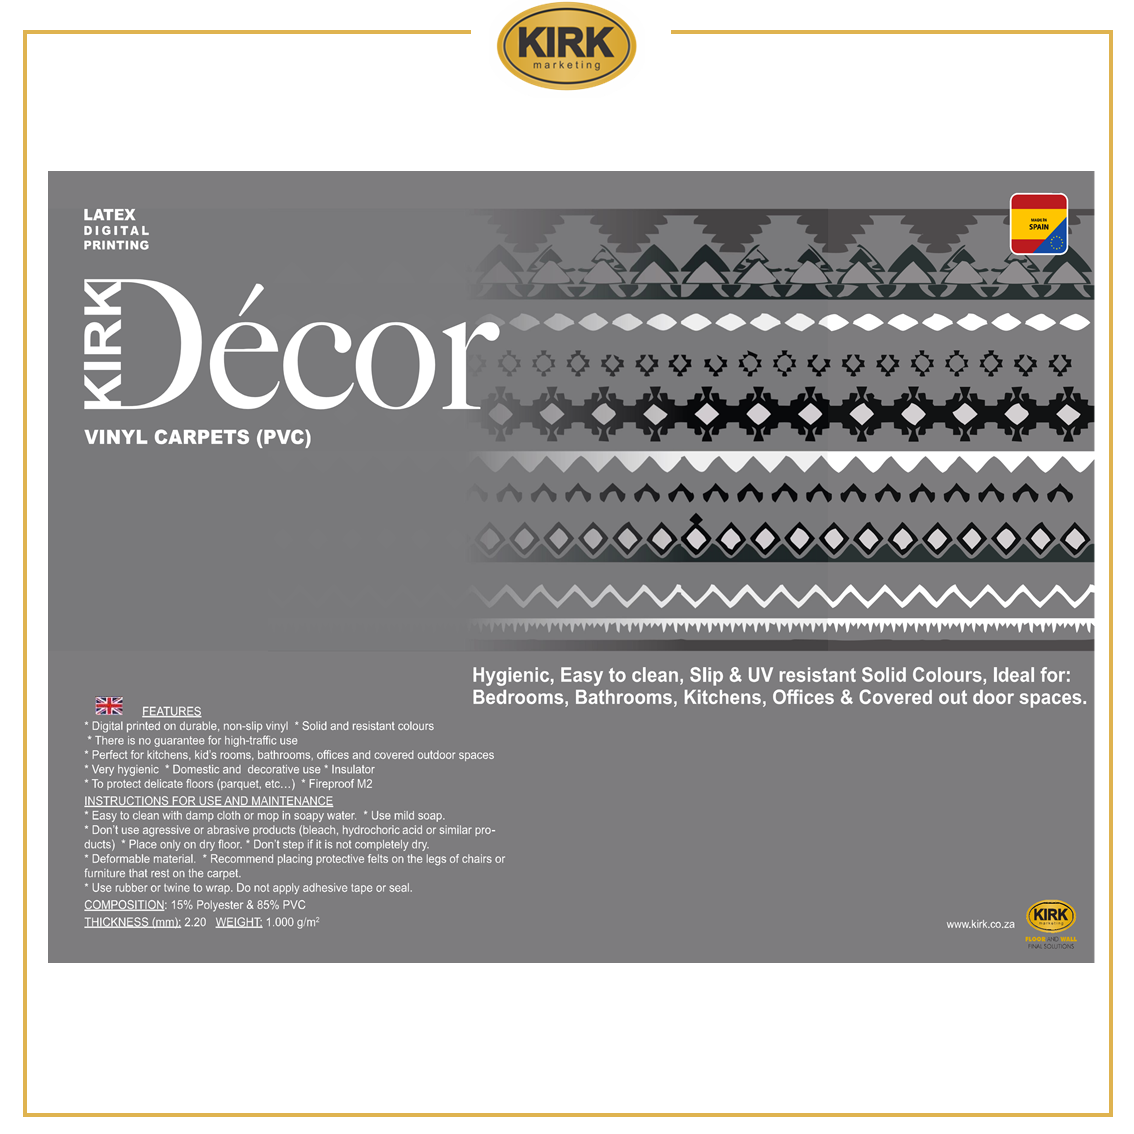 KIRK - DECOR-VINYL-RUGS Catalogue